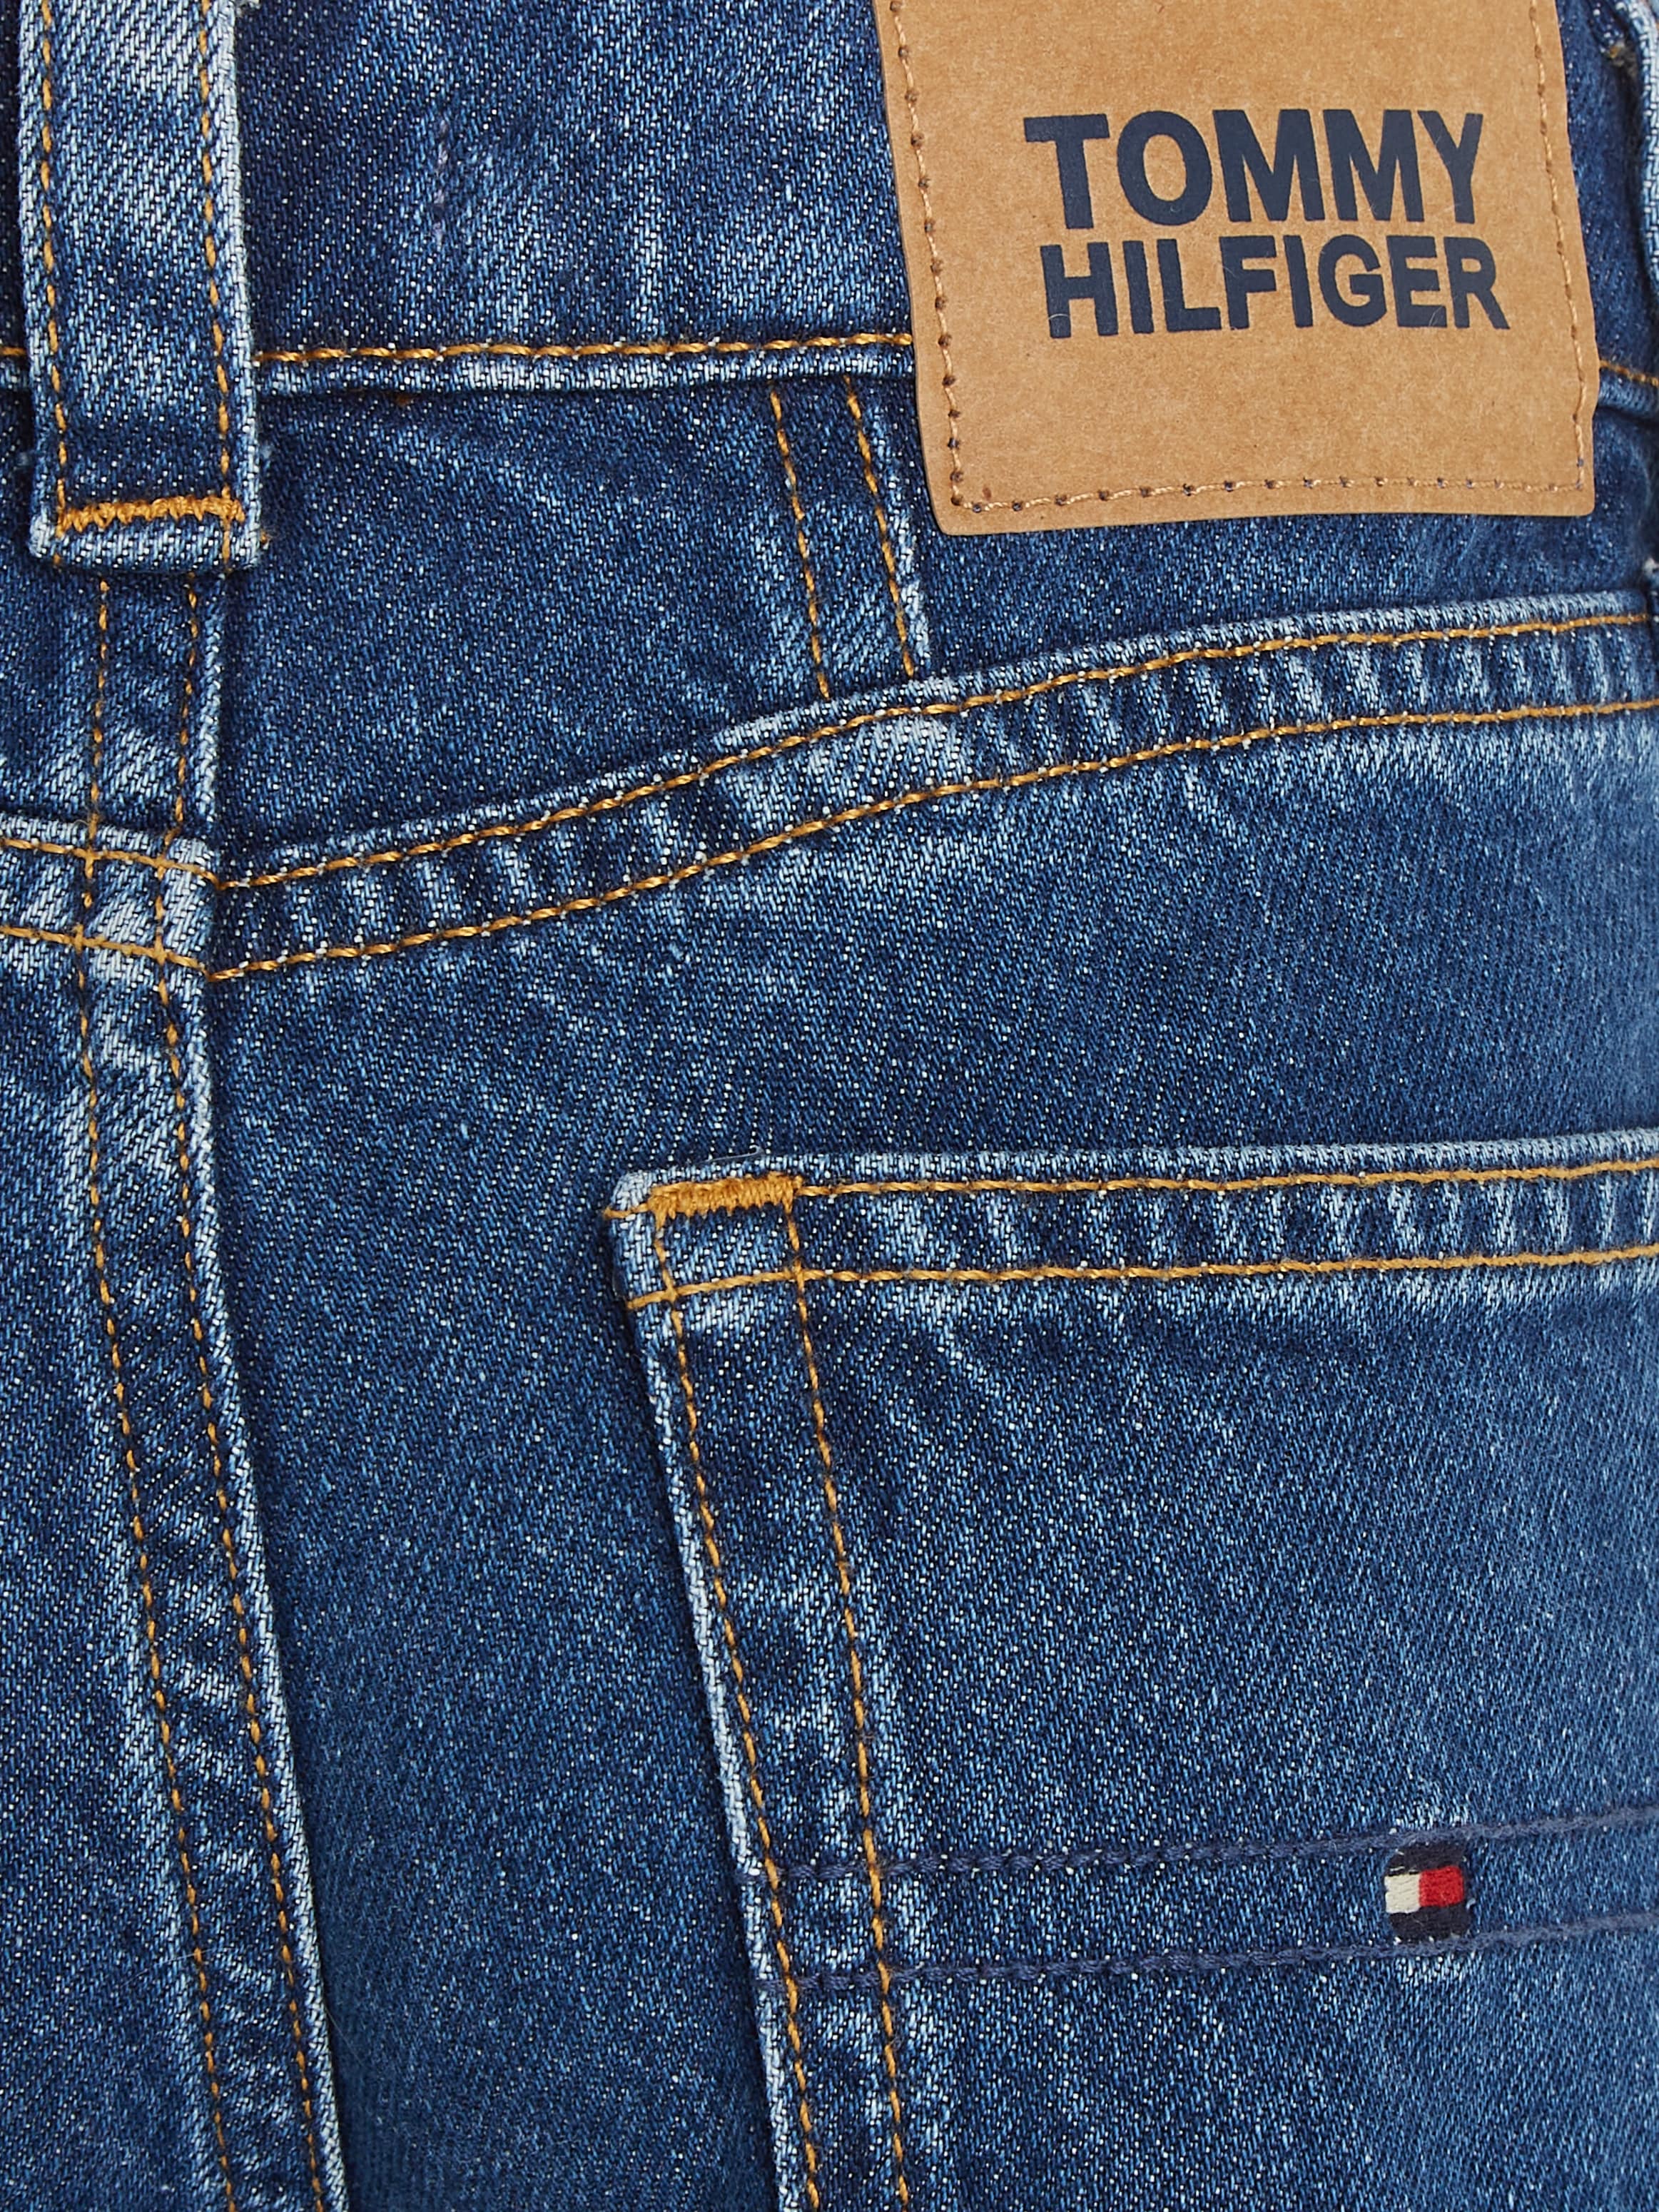 Tommy Hilfiger 5-Pocket-Jeans »GIRLFRIEND MID BLUE«, Kinder Kids Junior MiniMe,mit Leder-Brandlabel am hinteren Bund